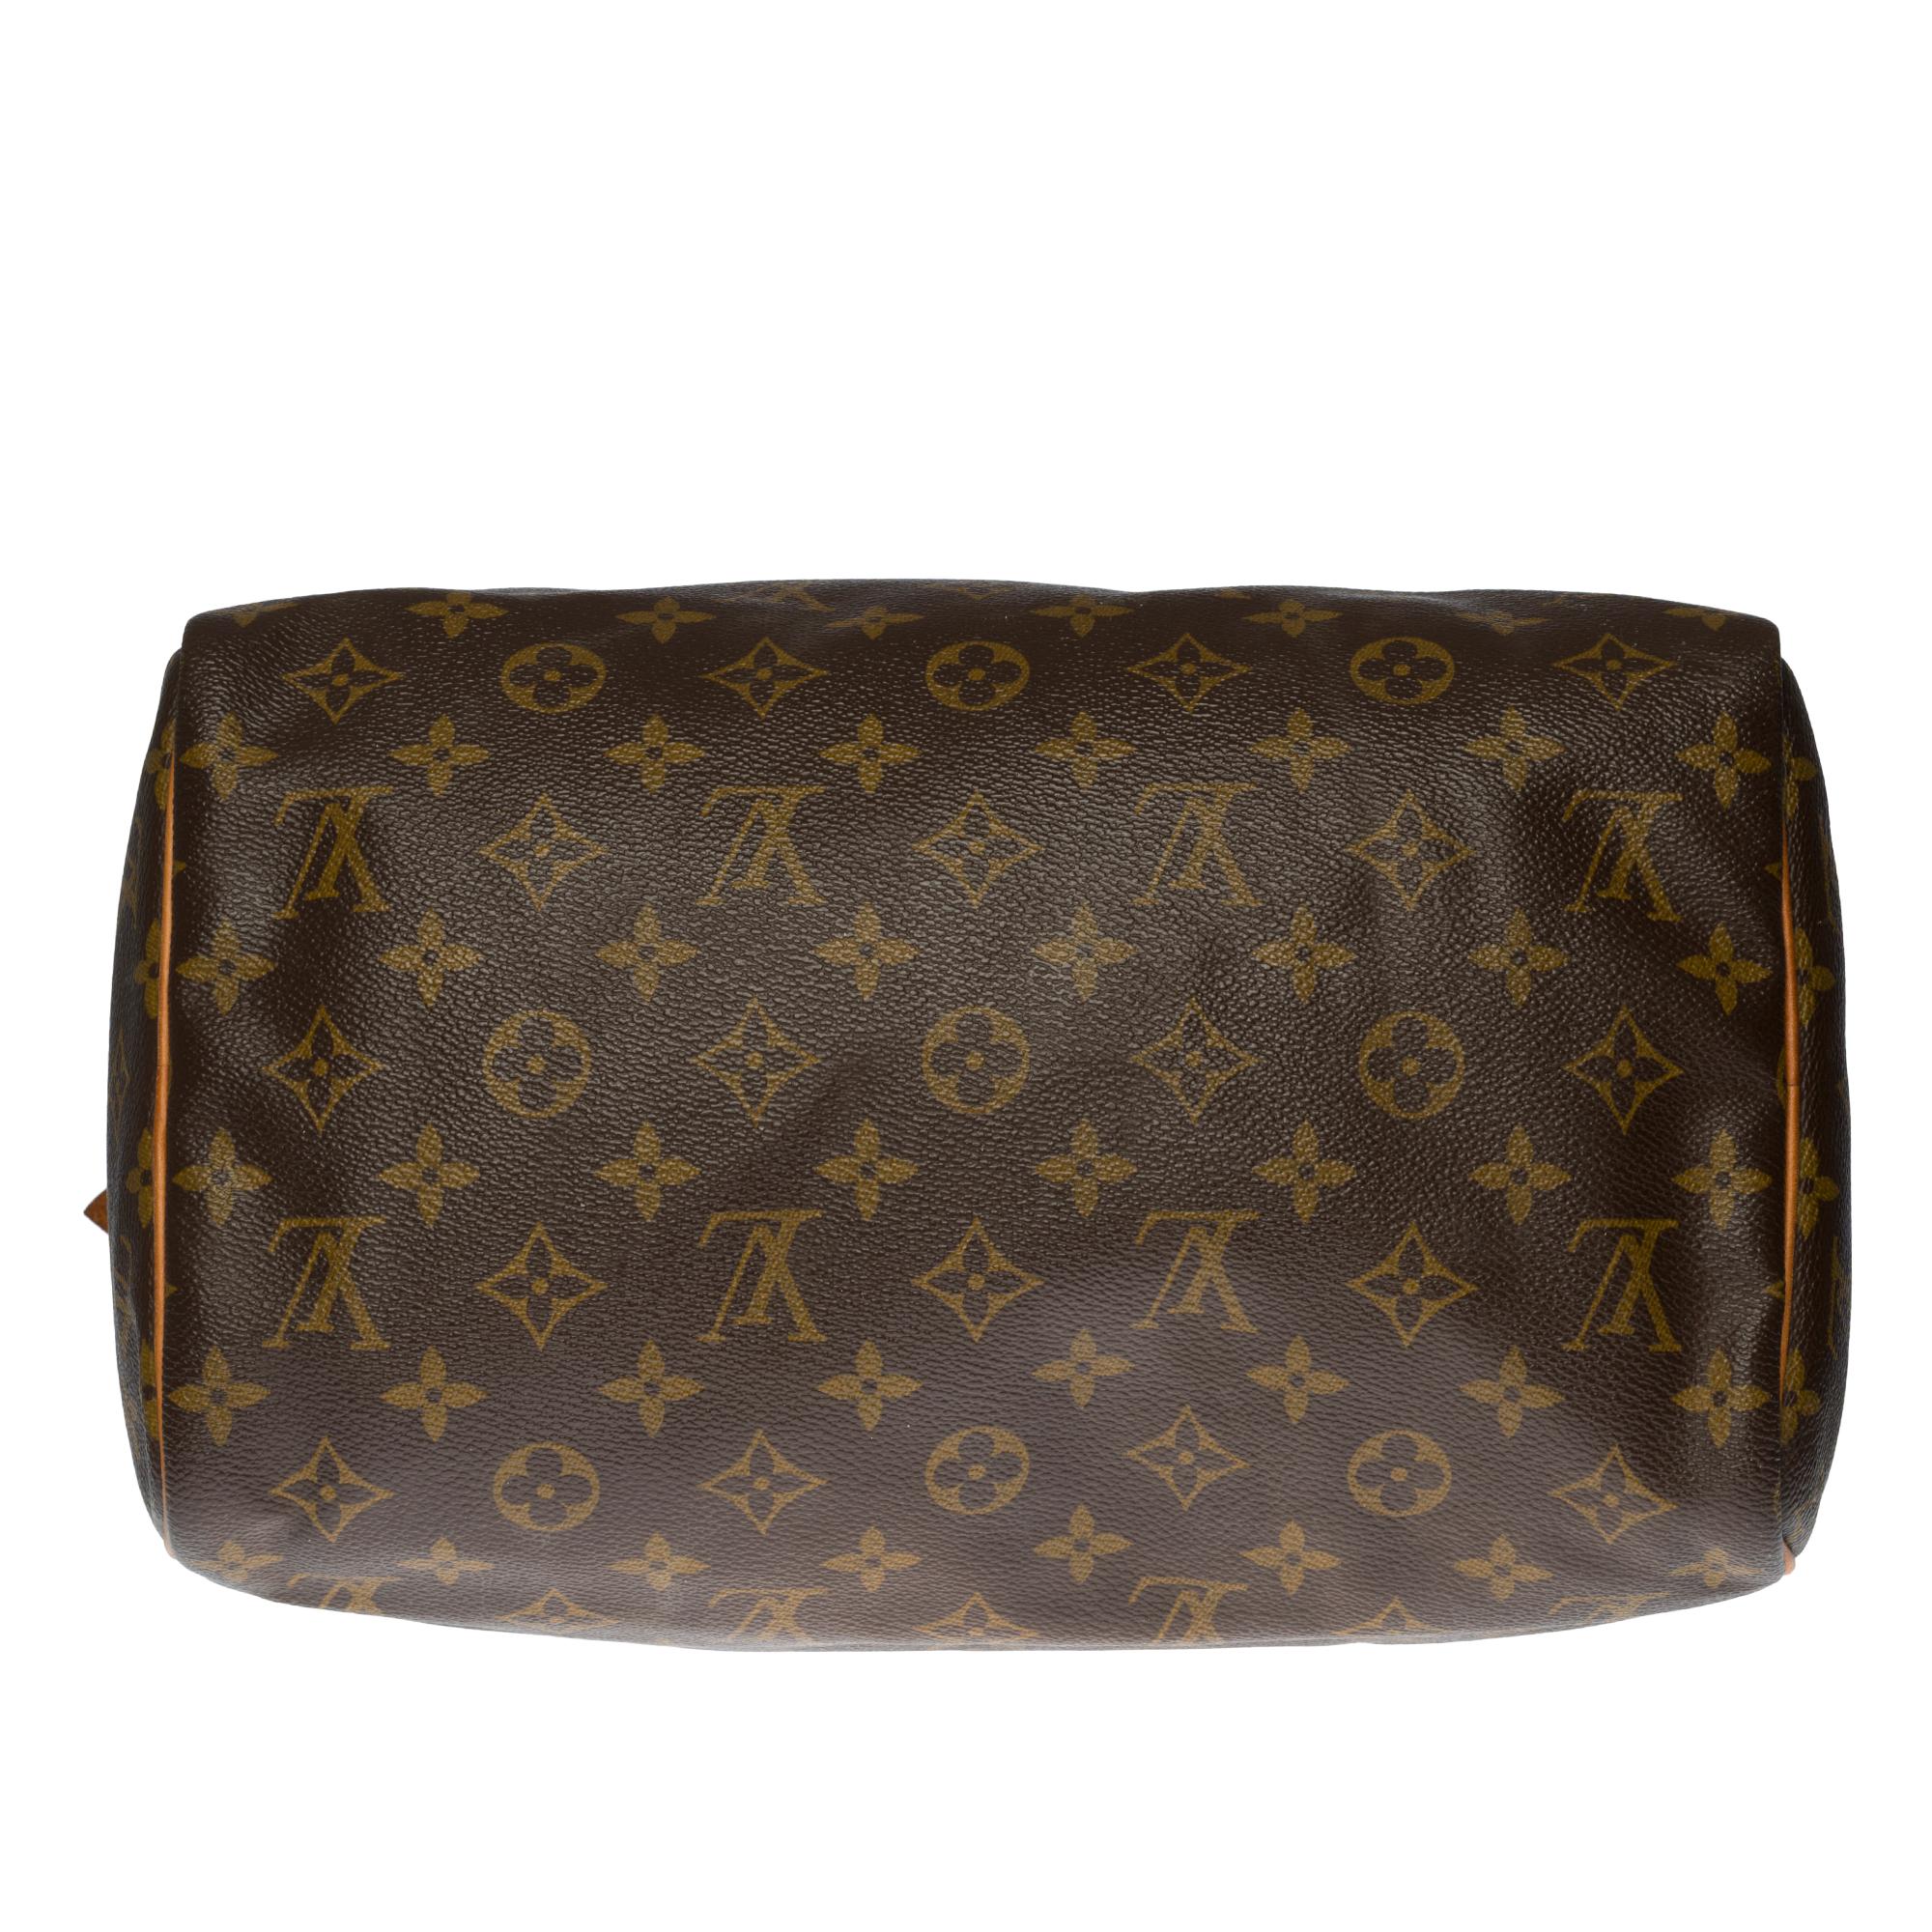 Louis Vuitton Speedy 30 handbag in brown canvas 4